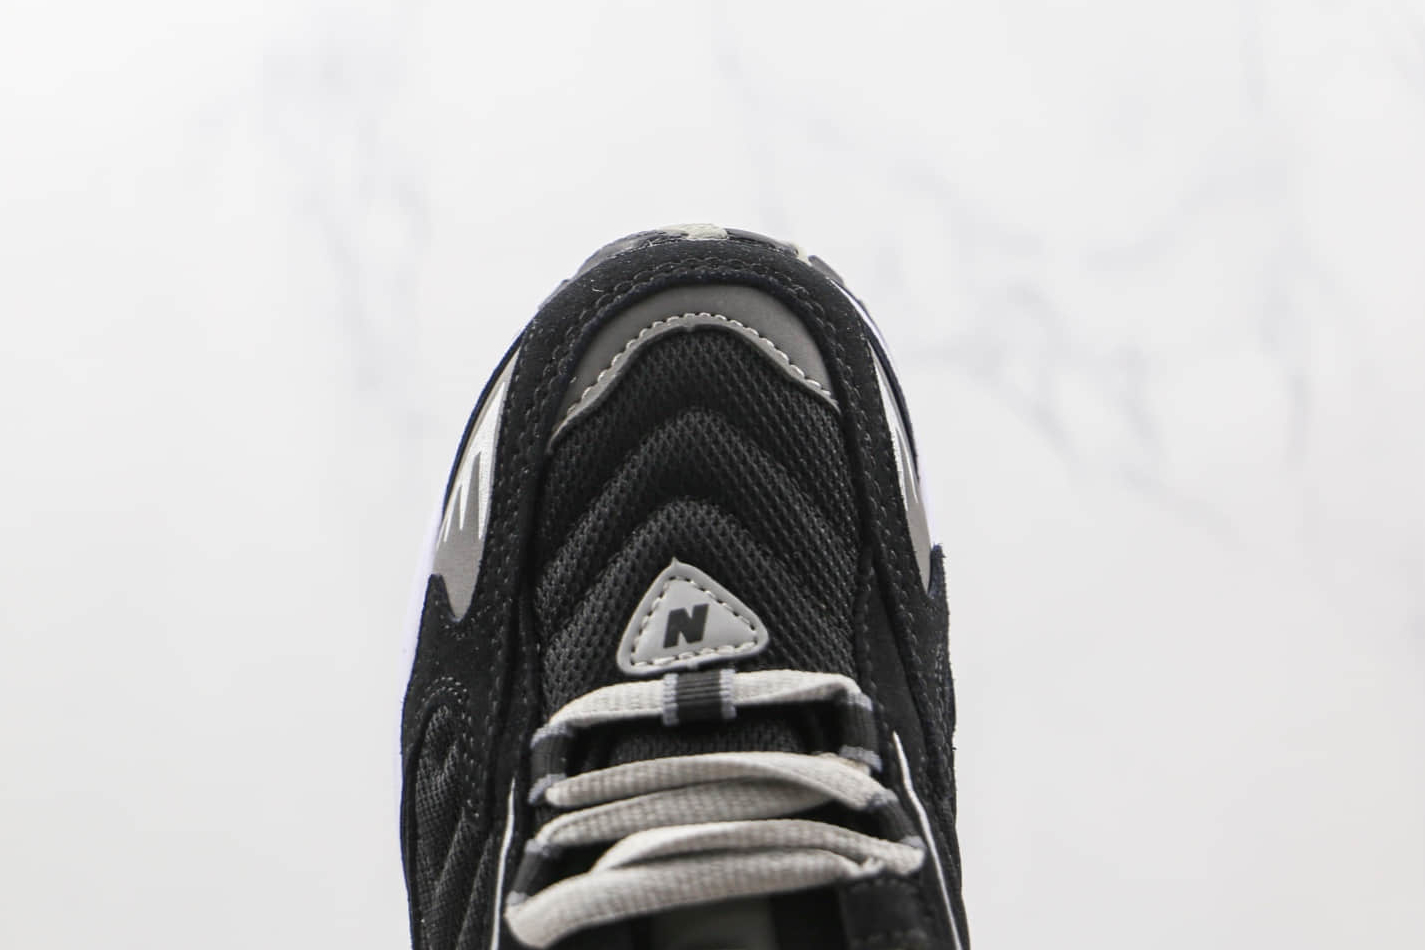 New Balance 725 'Black Metallic Silver' - Stylish and Sleek Sneakers